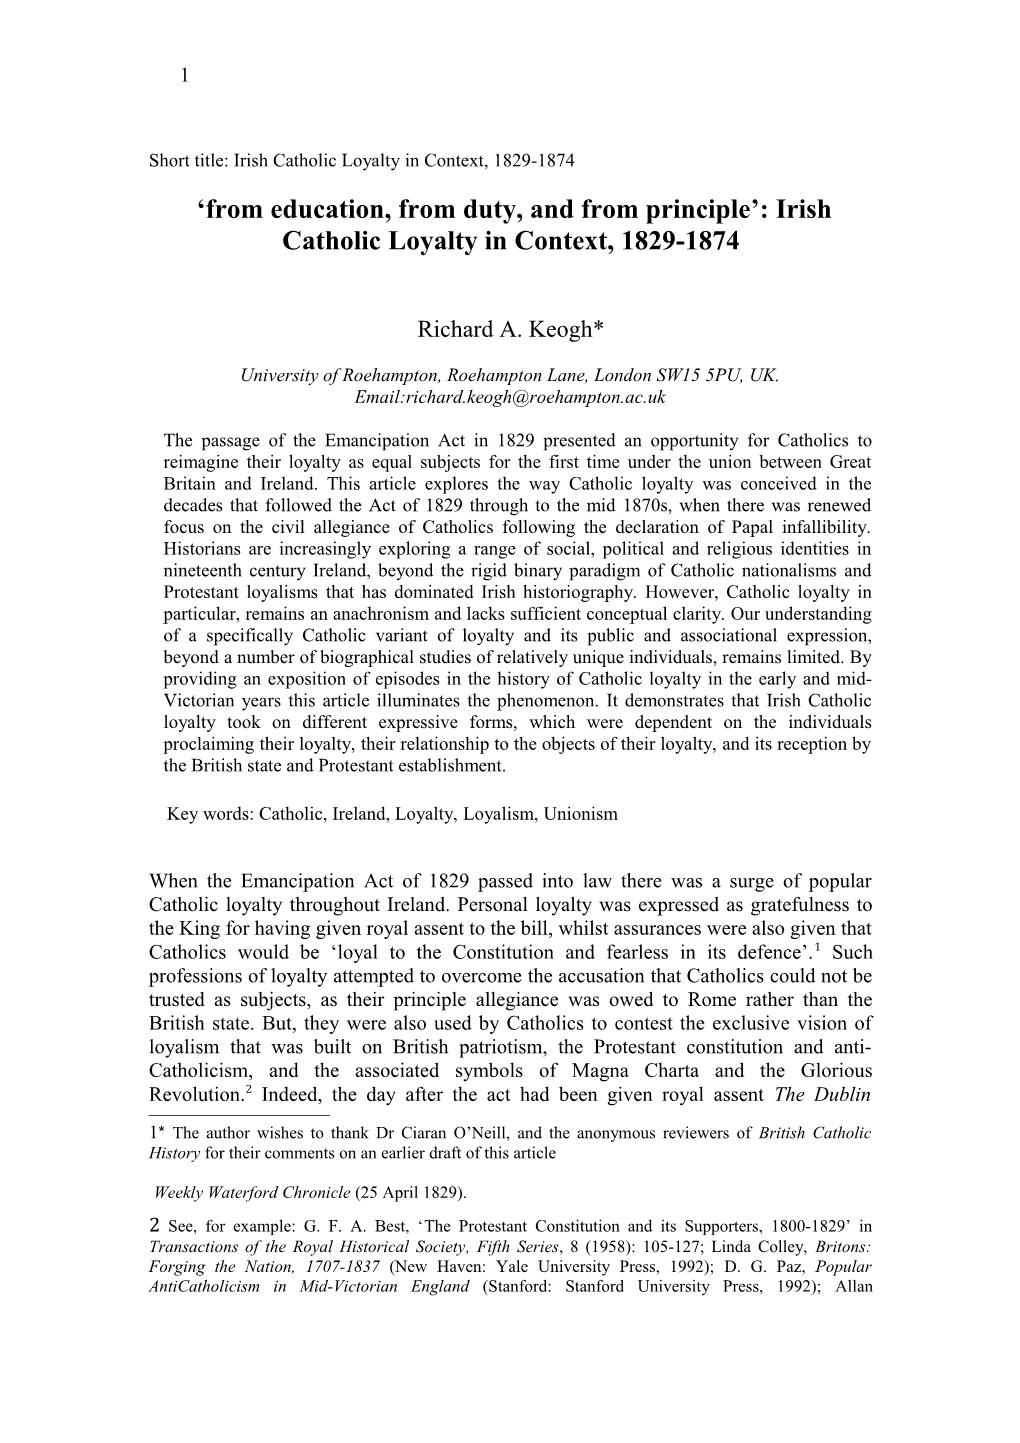 Short Title: Irish Catholic Loyalty in Context, 1829-1874